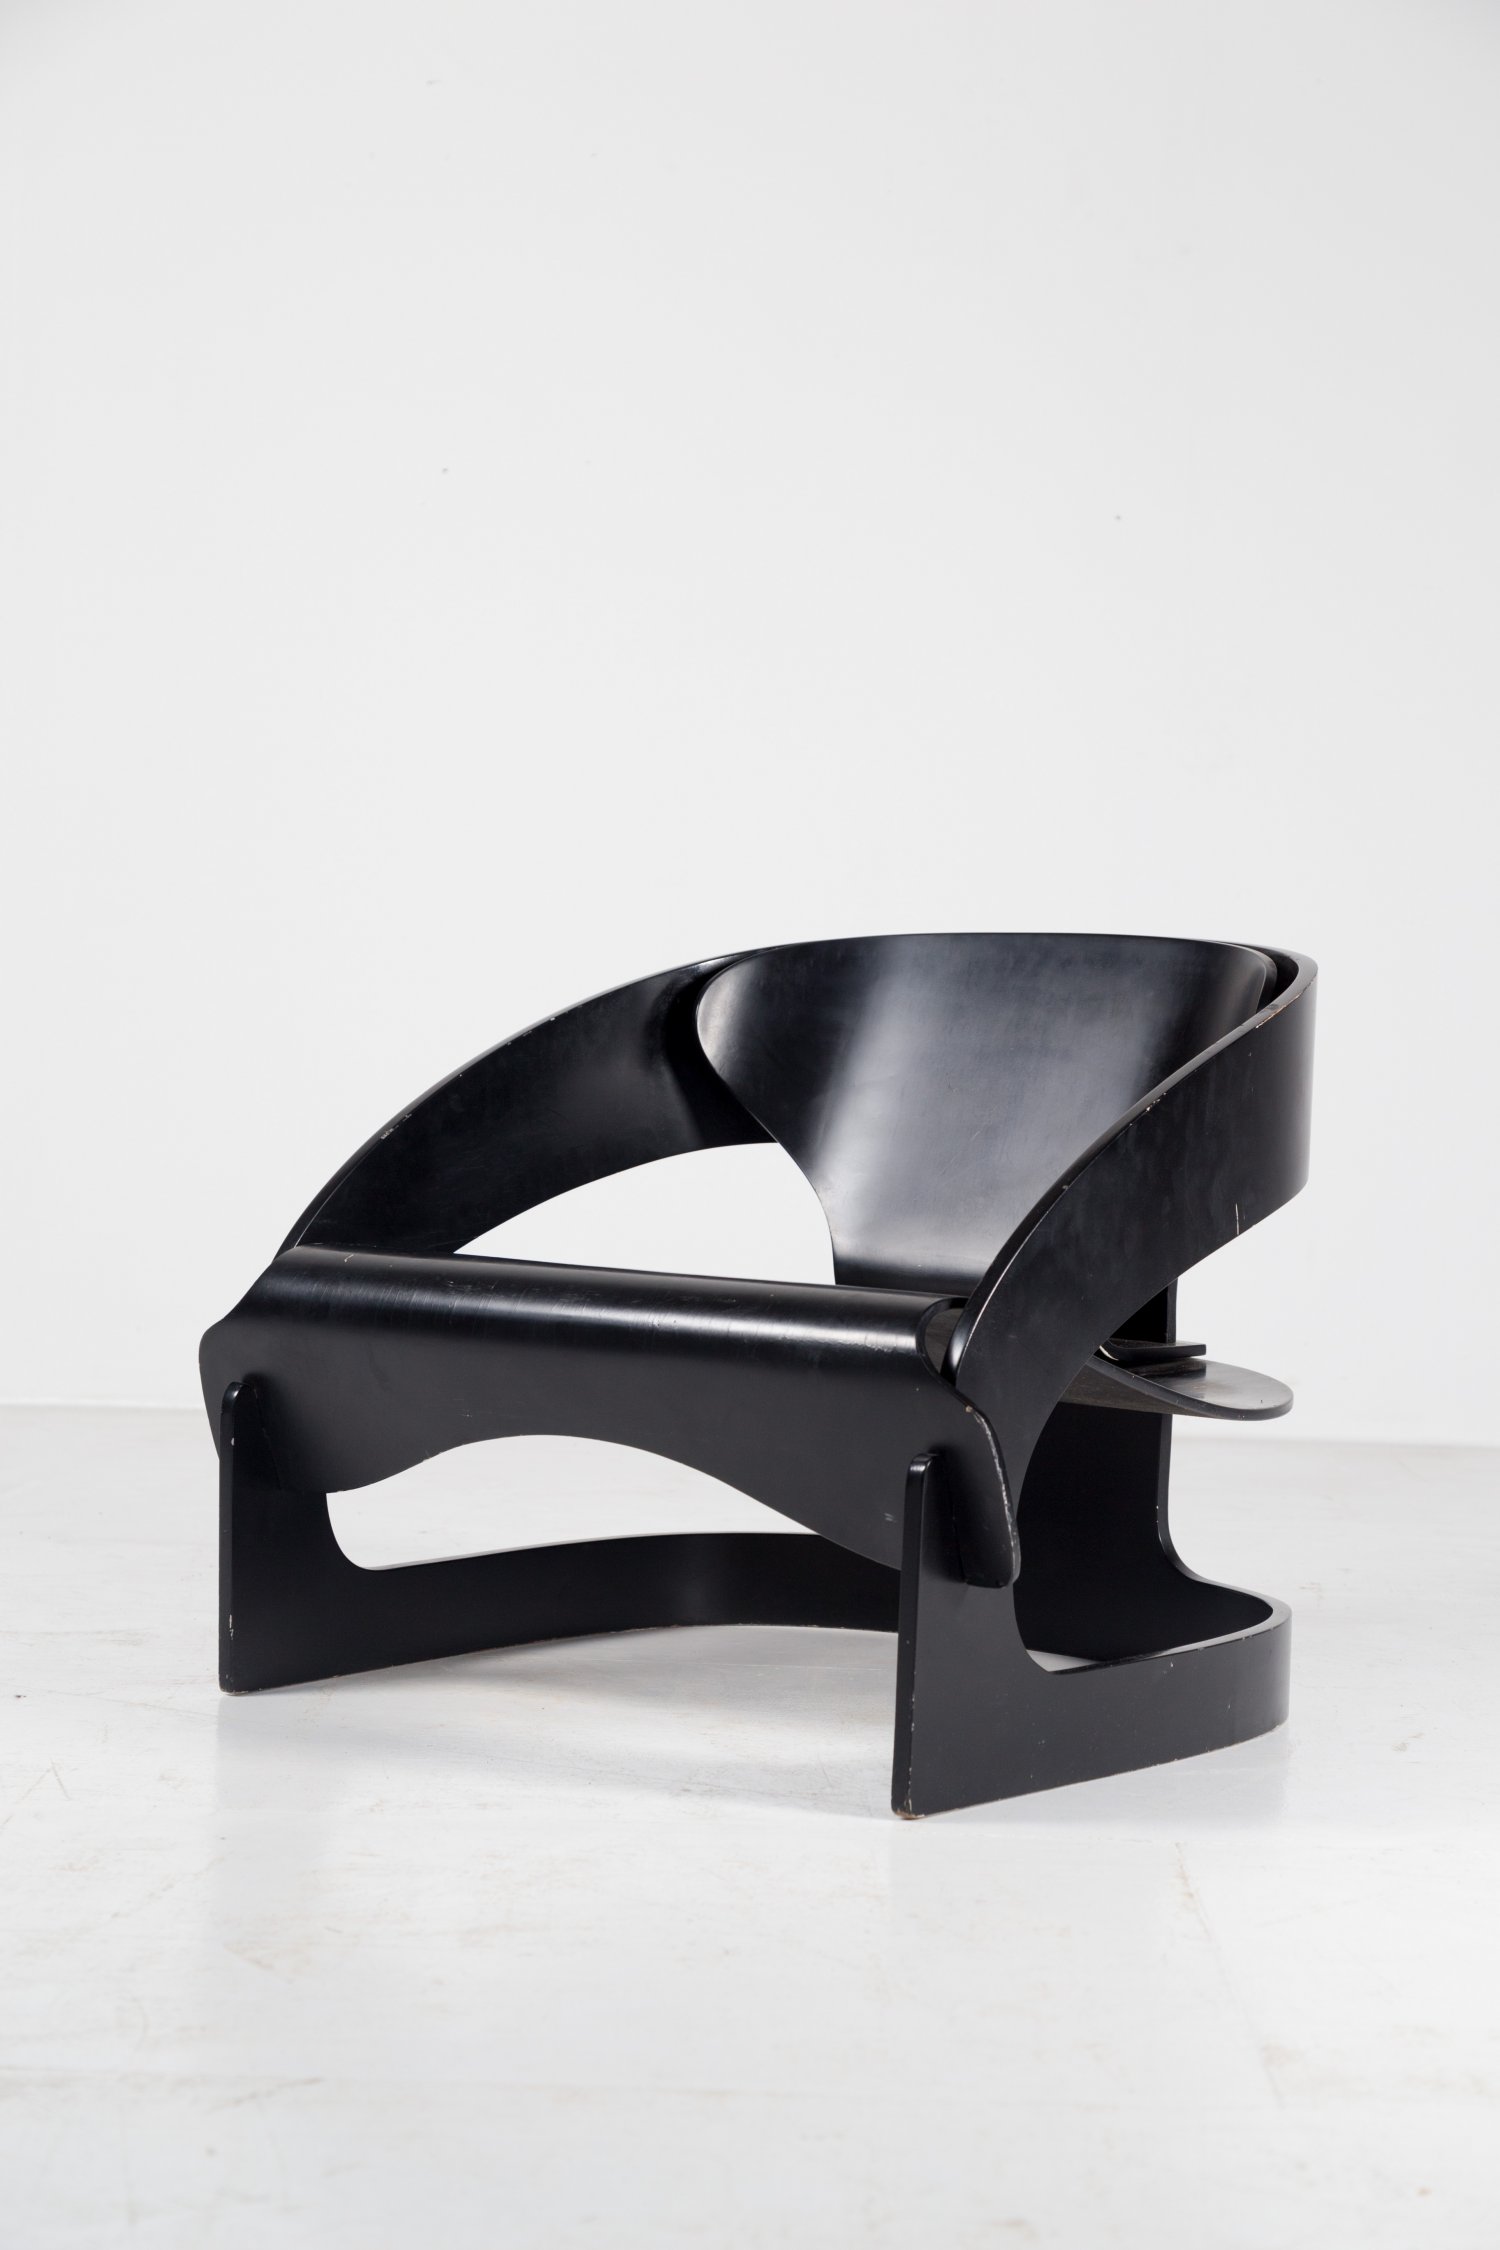 Joe colombo '4801' black plywood lounge chair